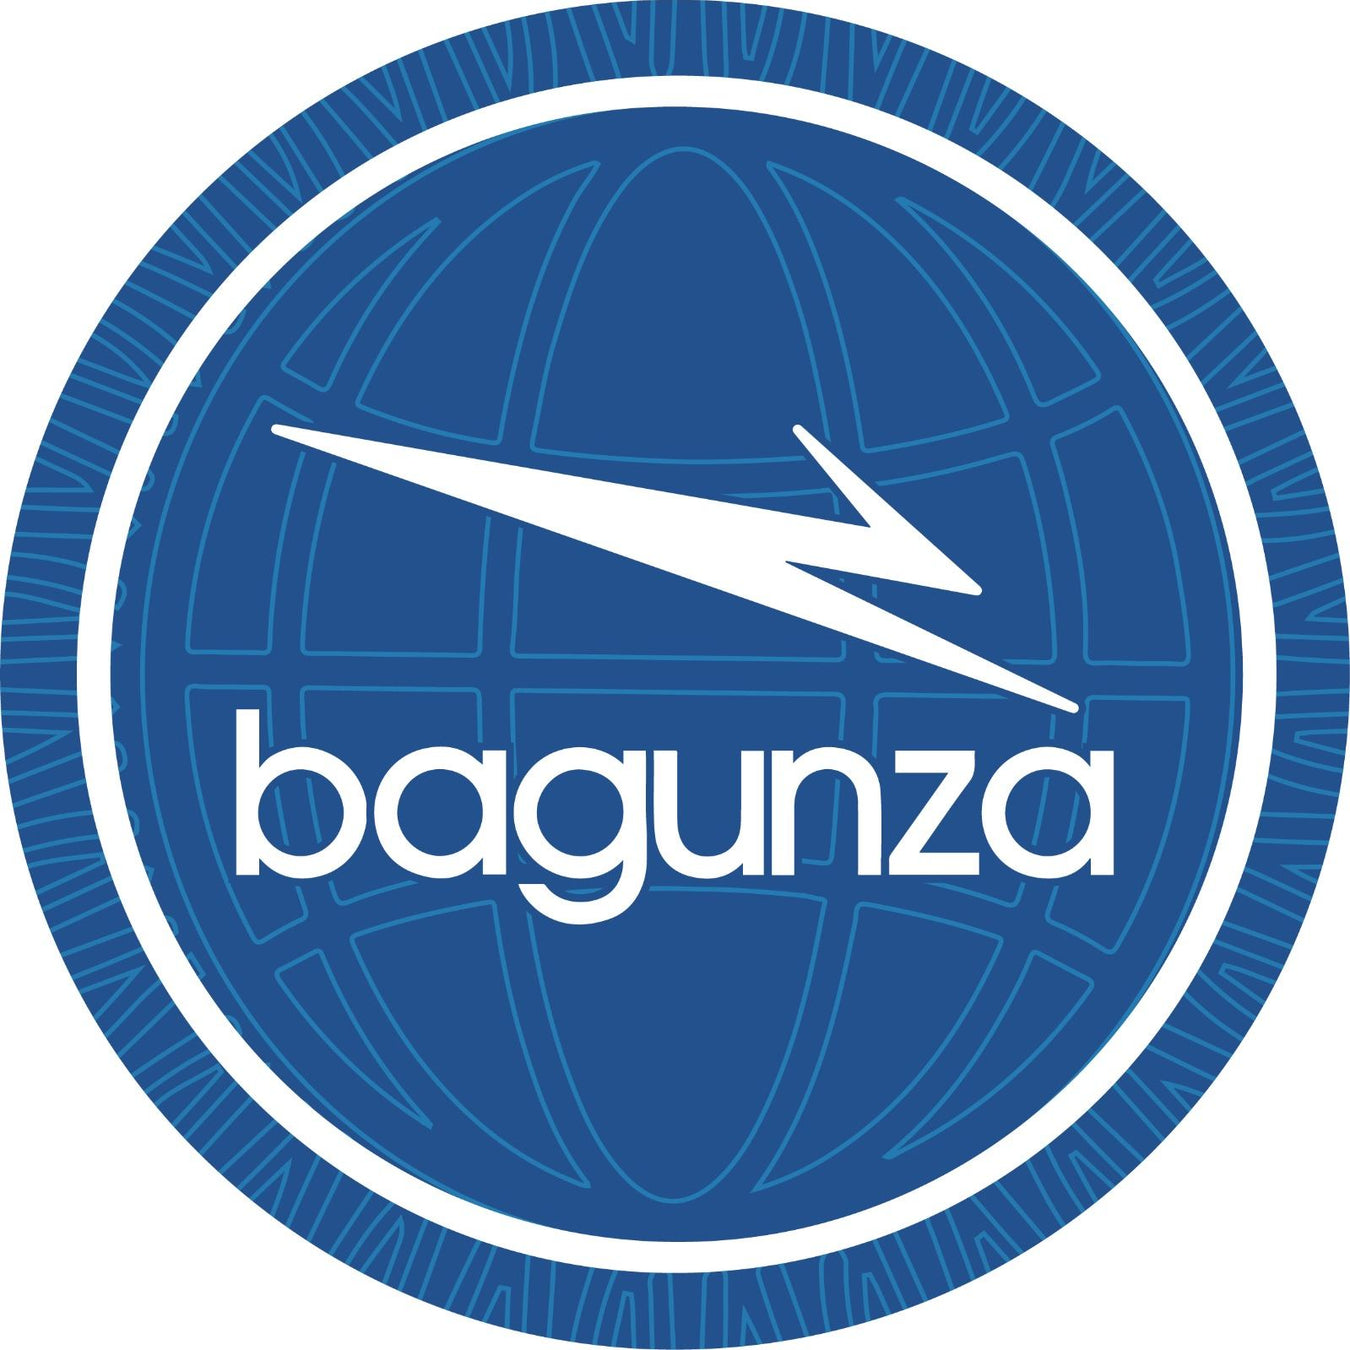 Bagunza